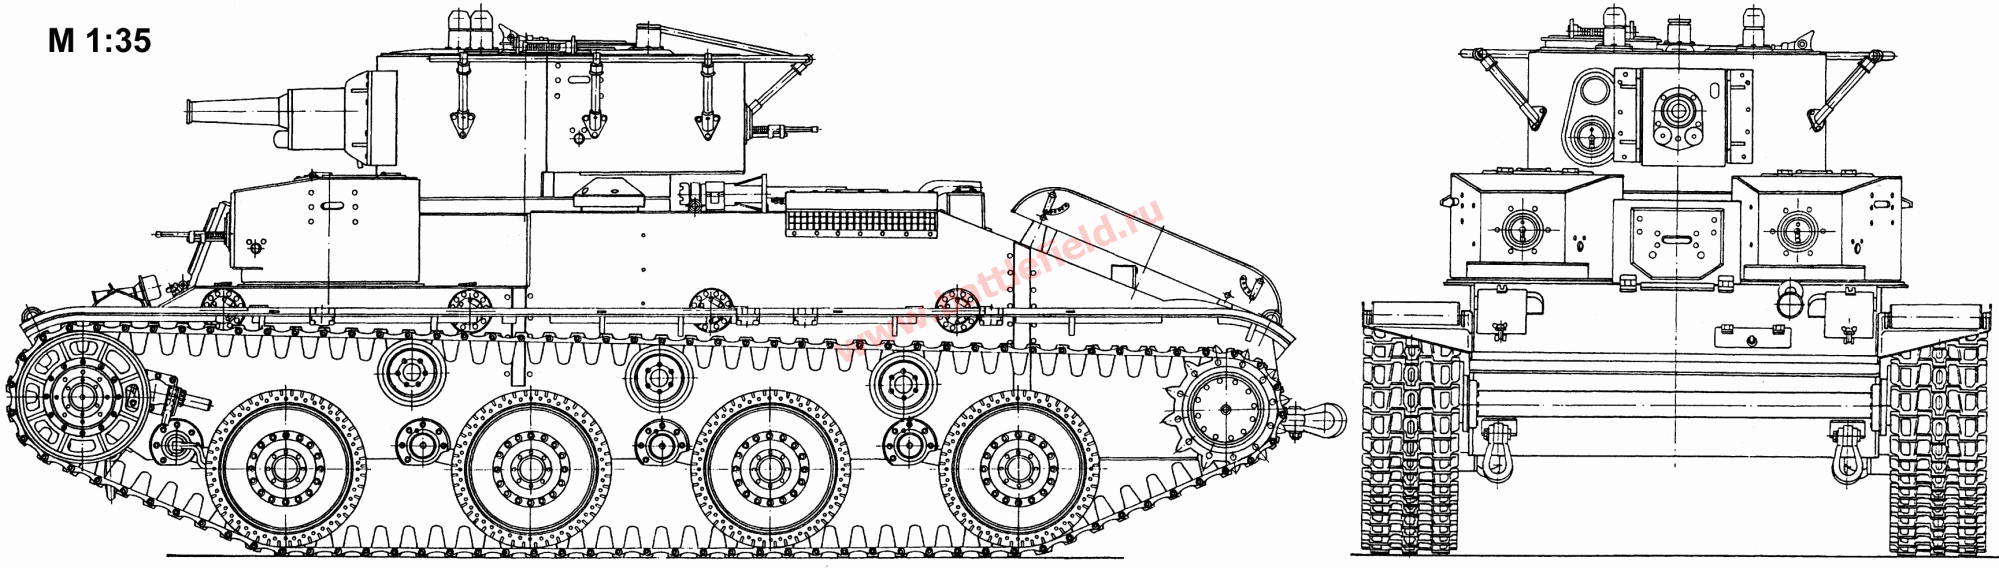 T 19 t ru. Т-29 танк. Т-29 танк СССР. Танк т 29 сбоку. Т-29 танк СССР чертежи.